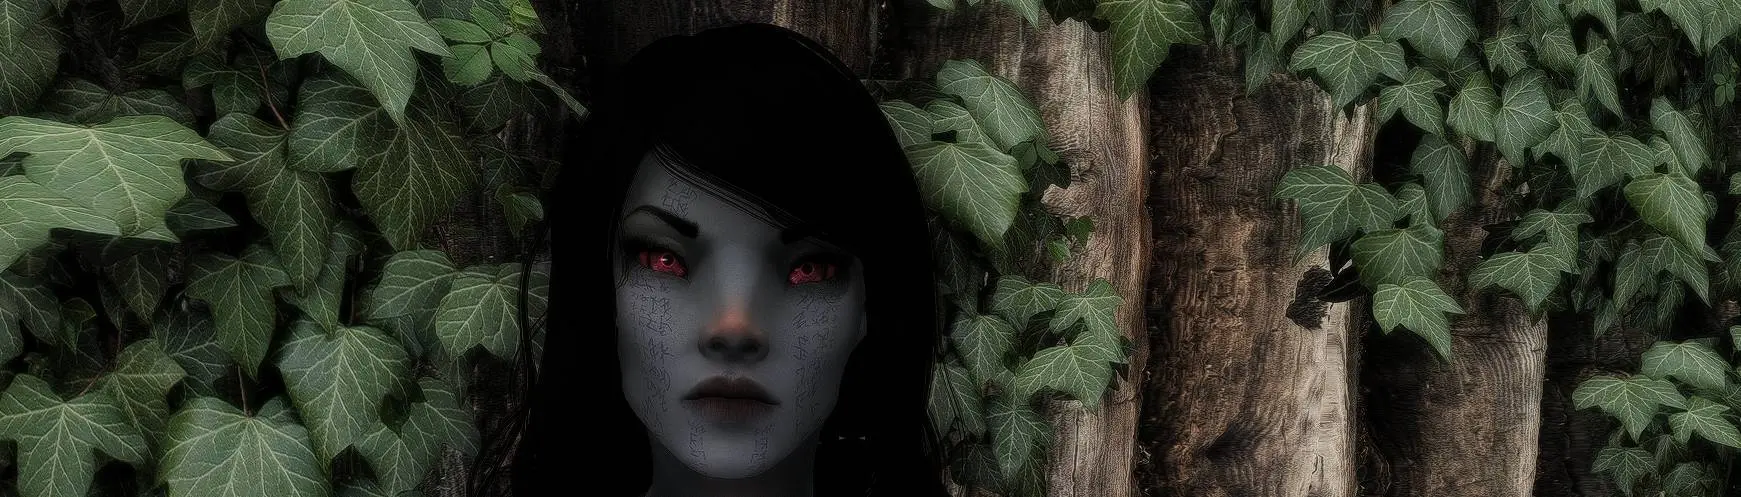 Female Dark Elf Dunmer For Nolvus At Skyrim Special Edition Nexus Mods And Community 9465